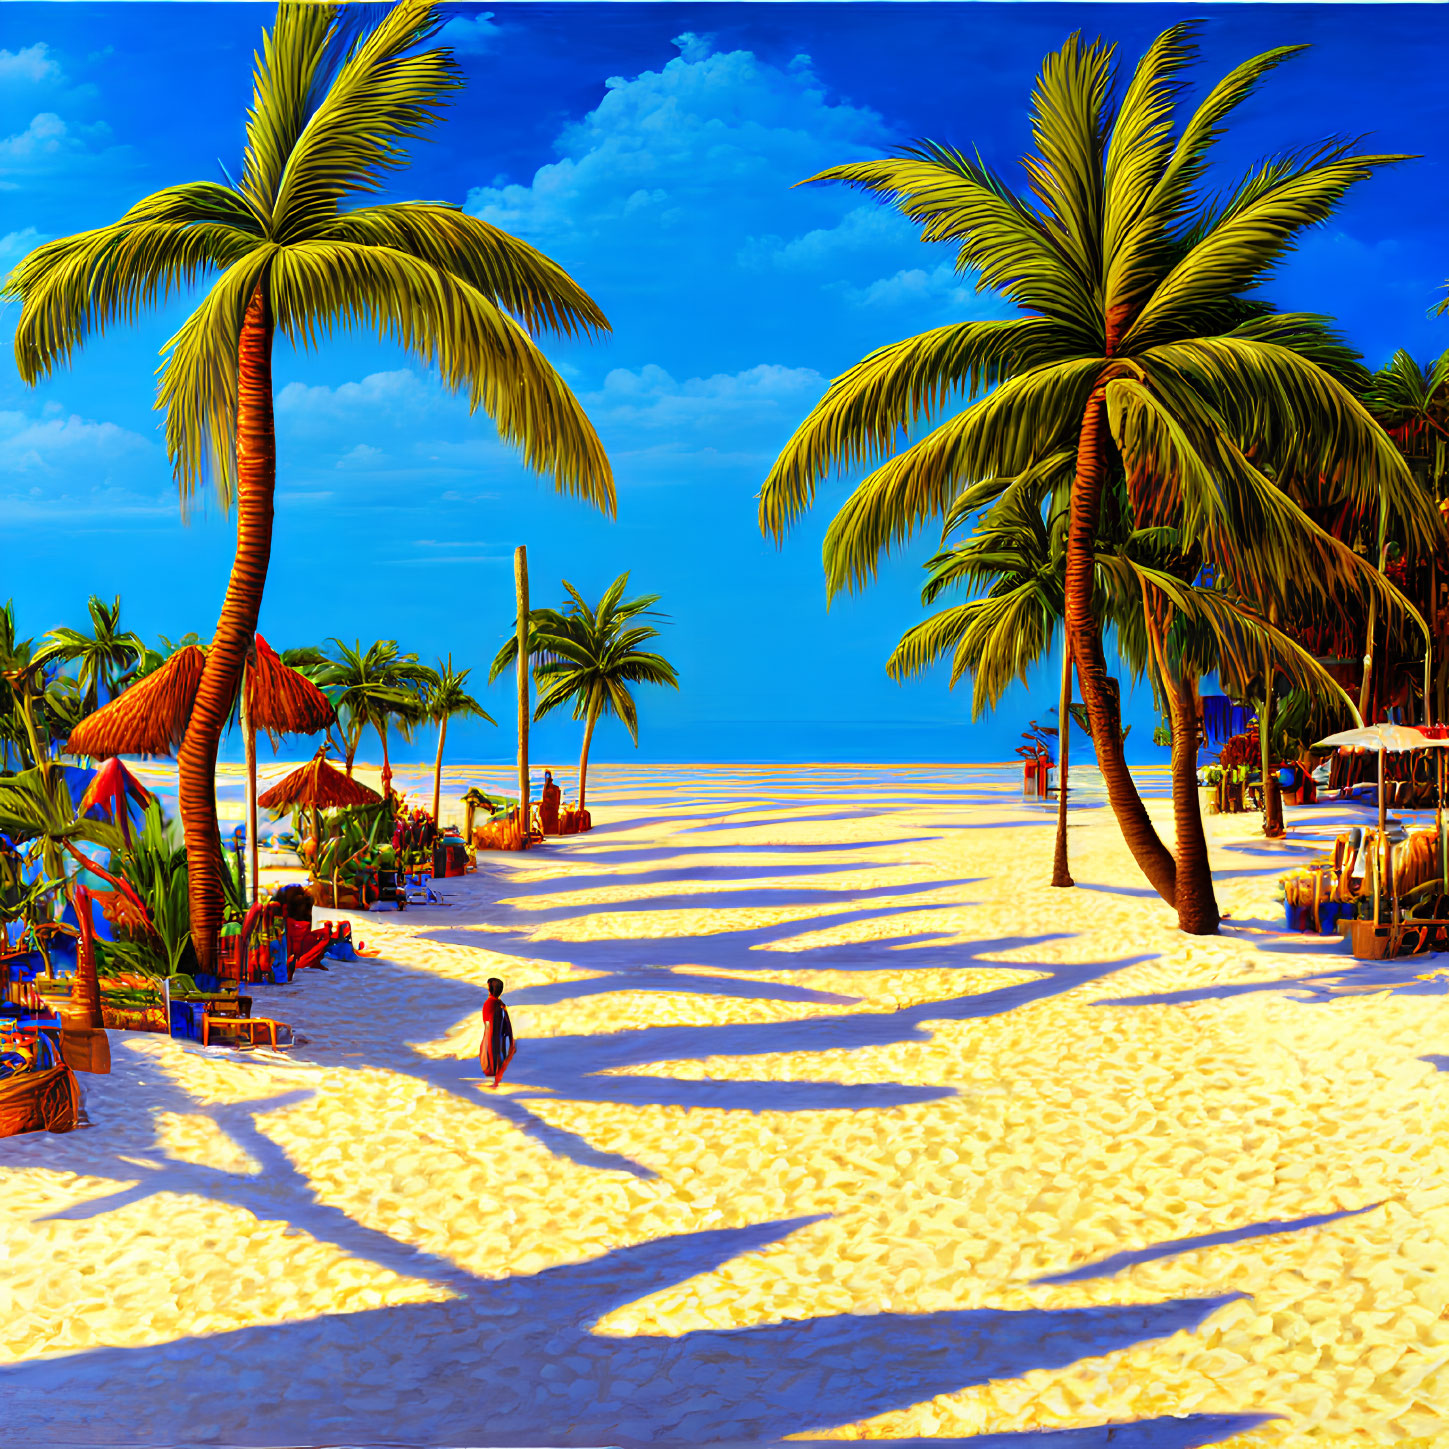 Tropical beach scene with palm trees, beachgoers, umbrellas